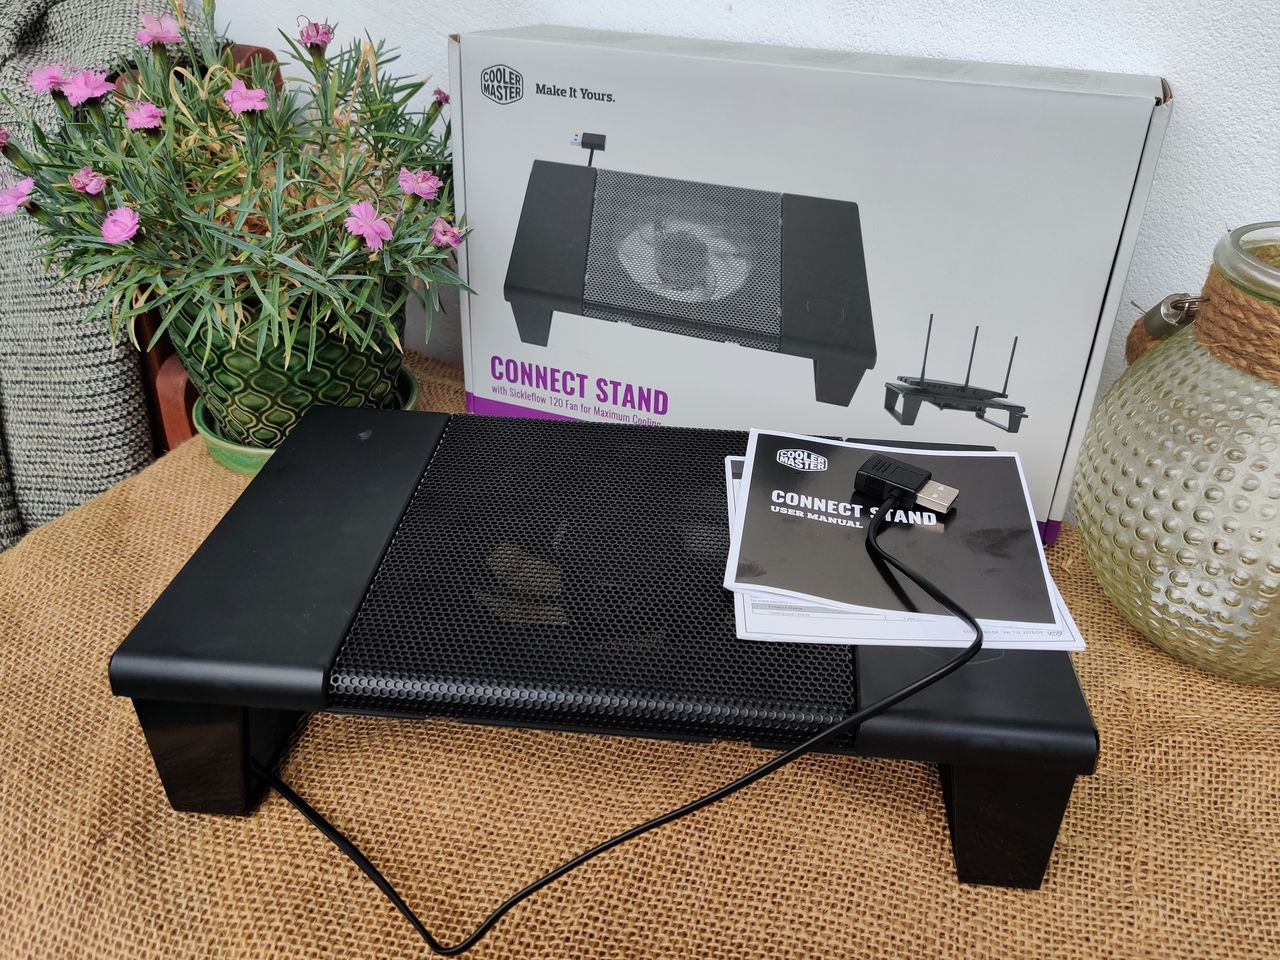 Minimalistyczna podstawka pod router - Cooler Master Connect Stand [szybki test]